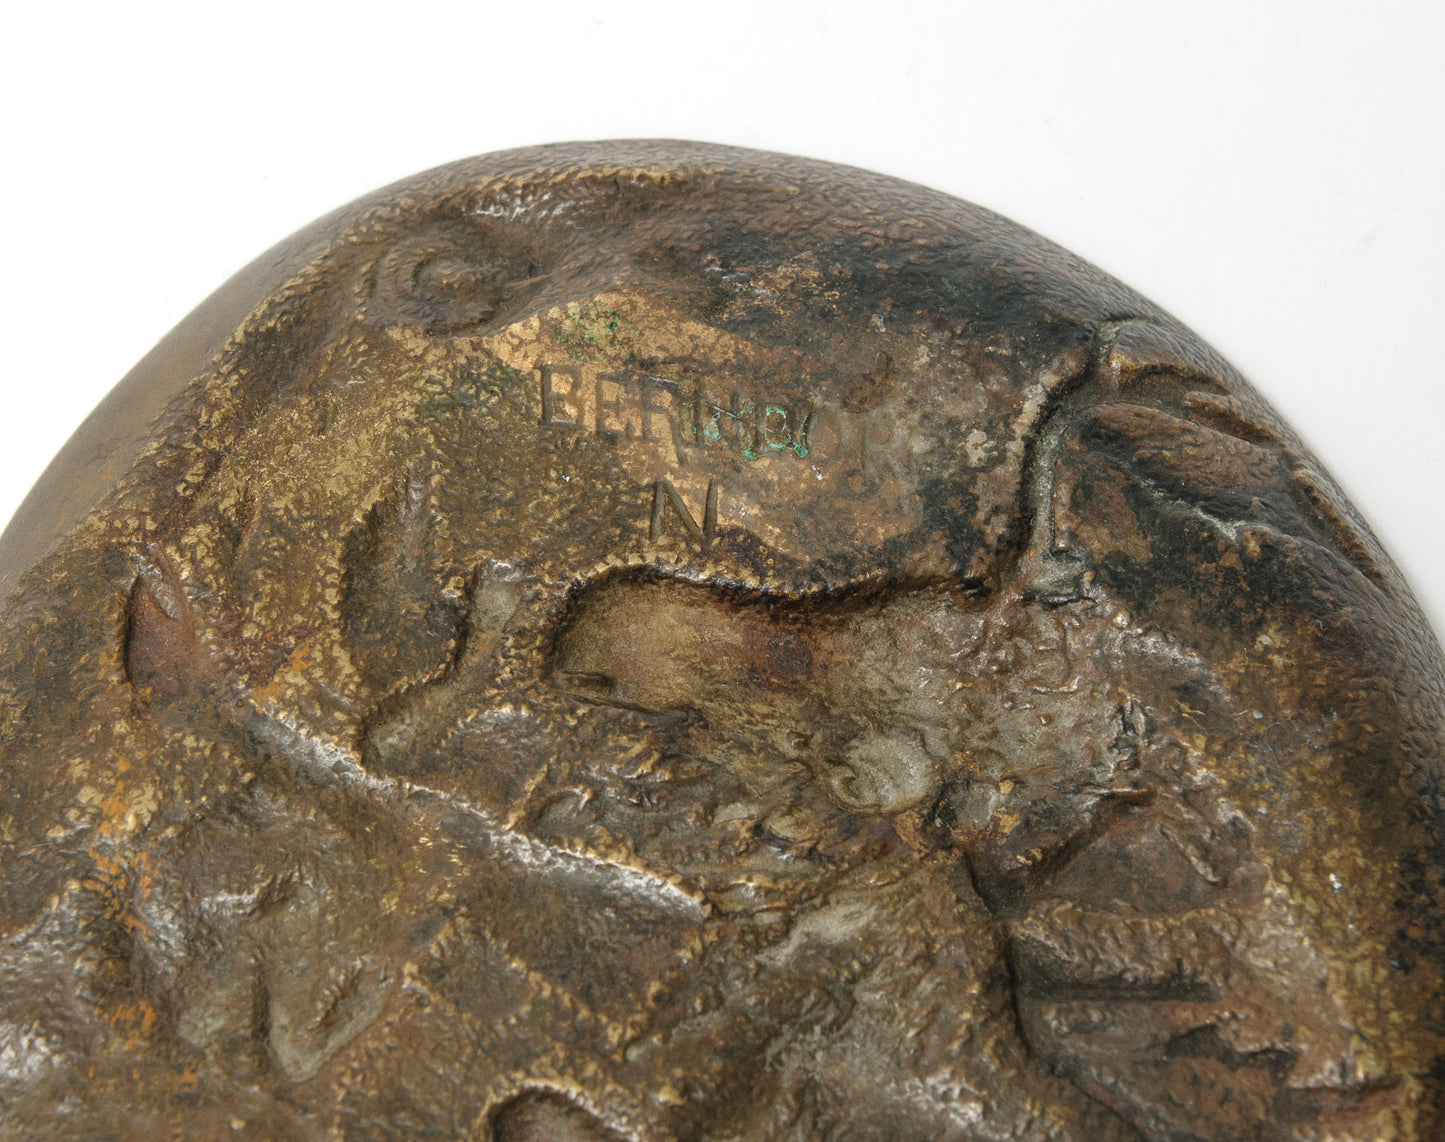 Antique Austrian Bronze Berndorf Vide Poche Dish - Moose Attacking Wolf c1890 (Code 1064)